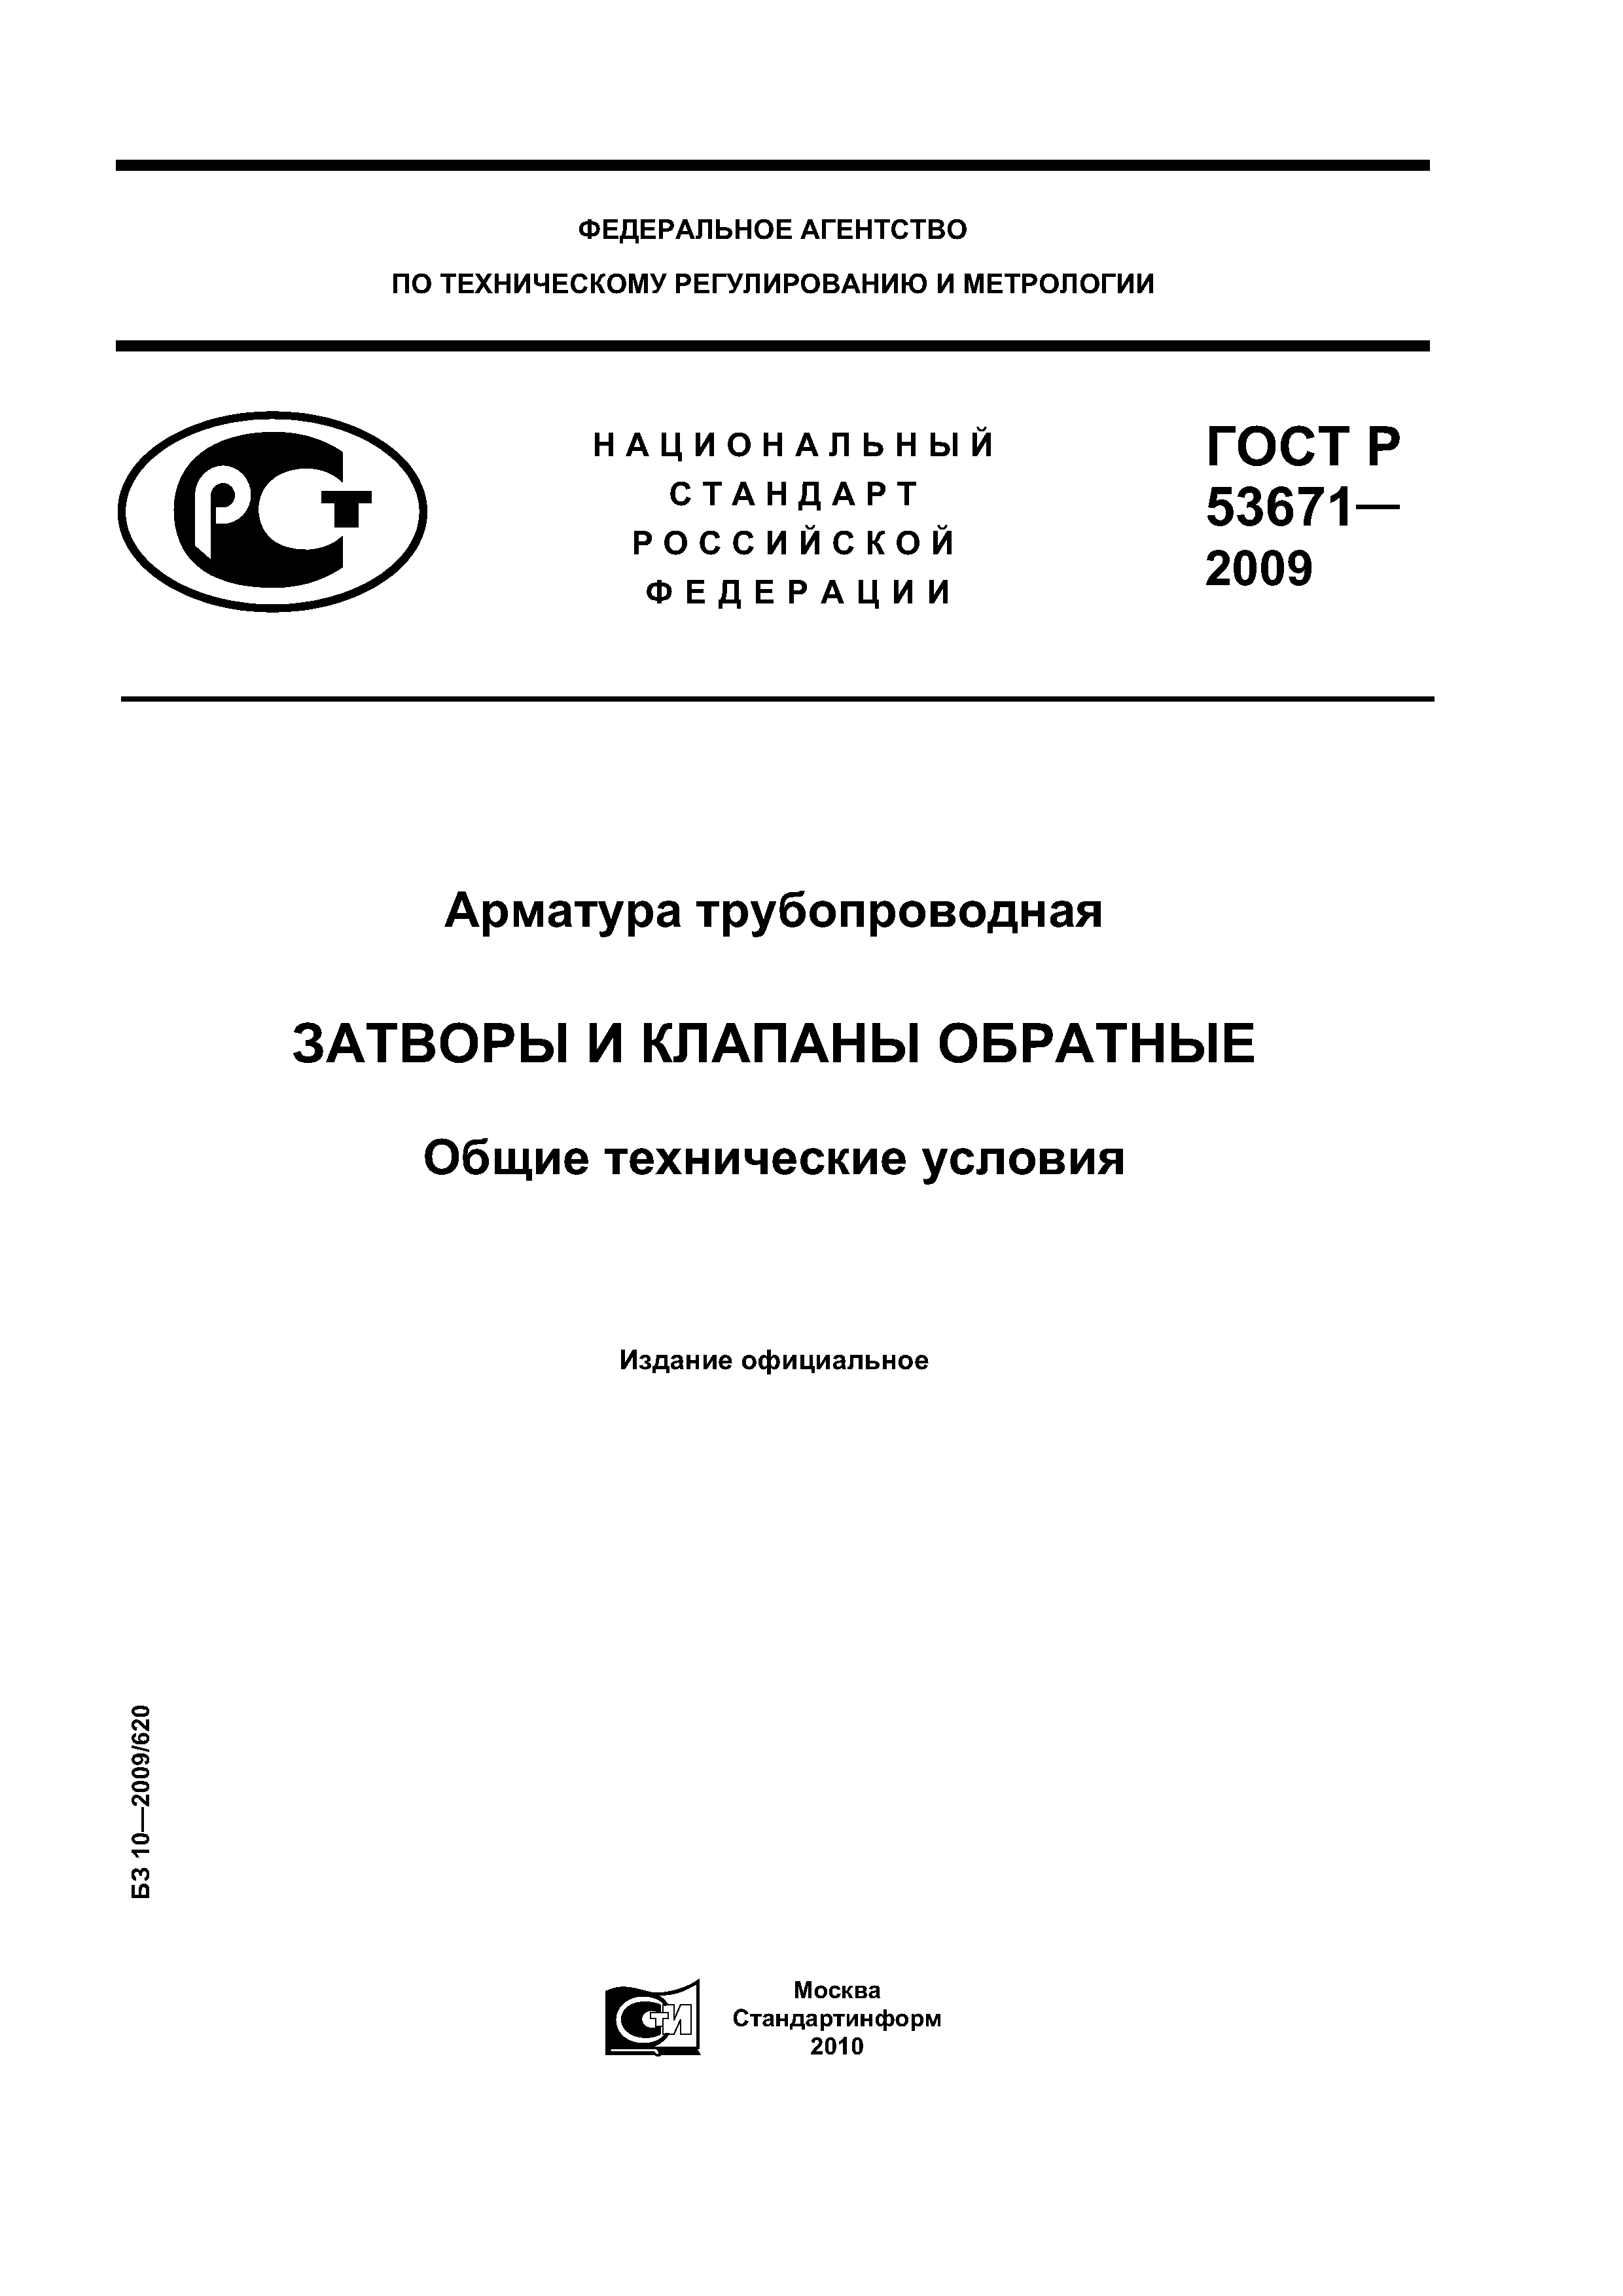 ГОСТ Р 53671-2009